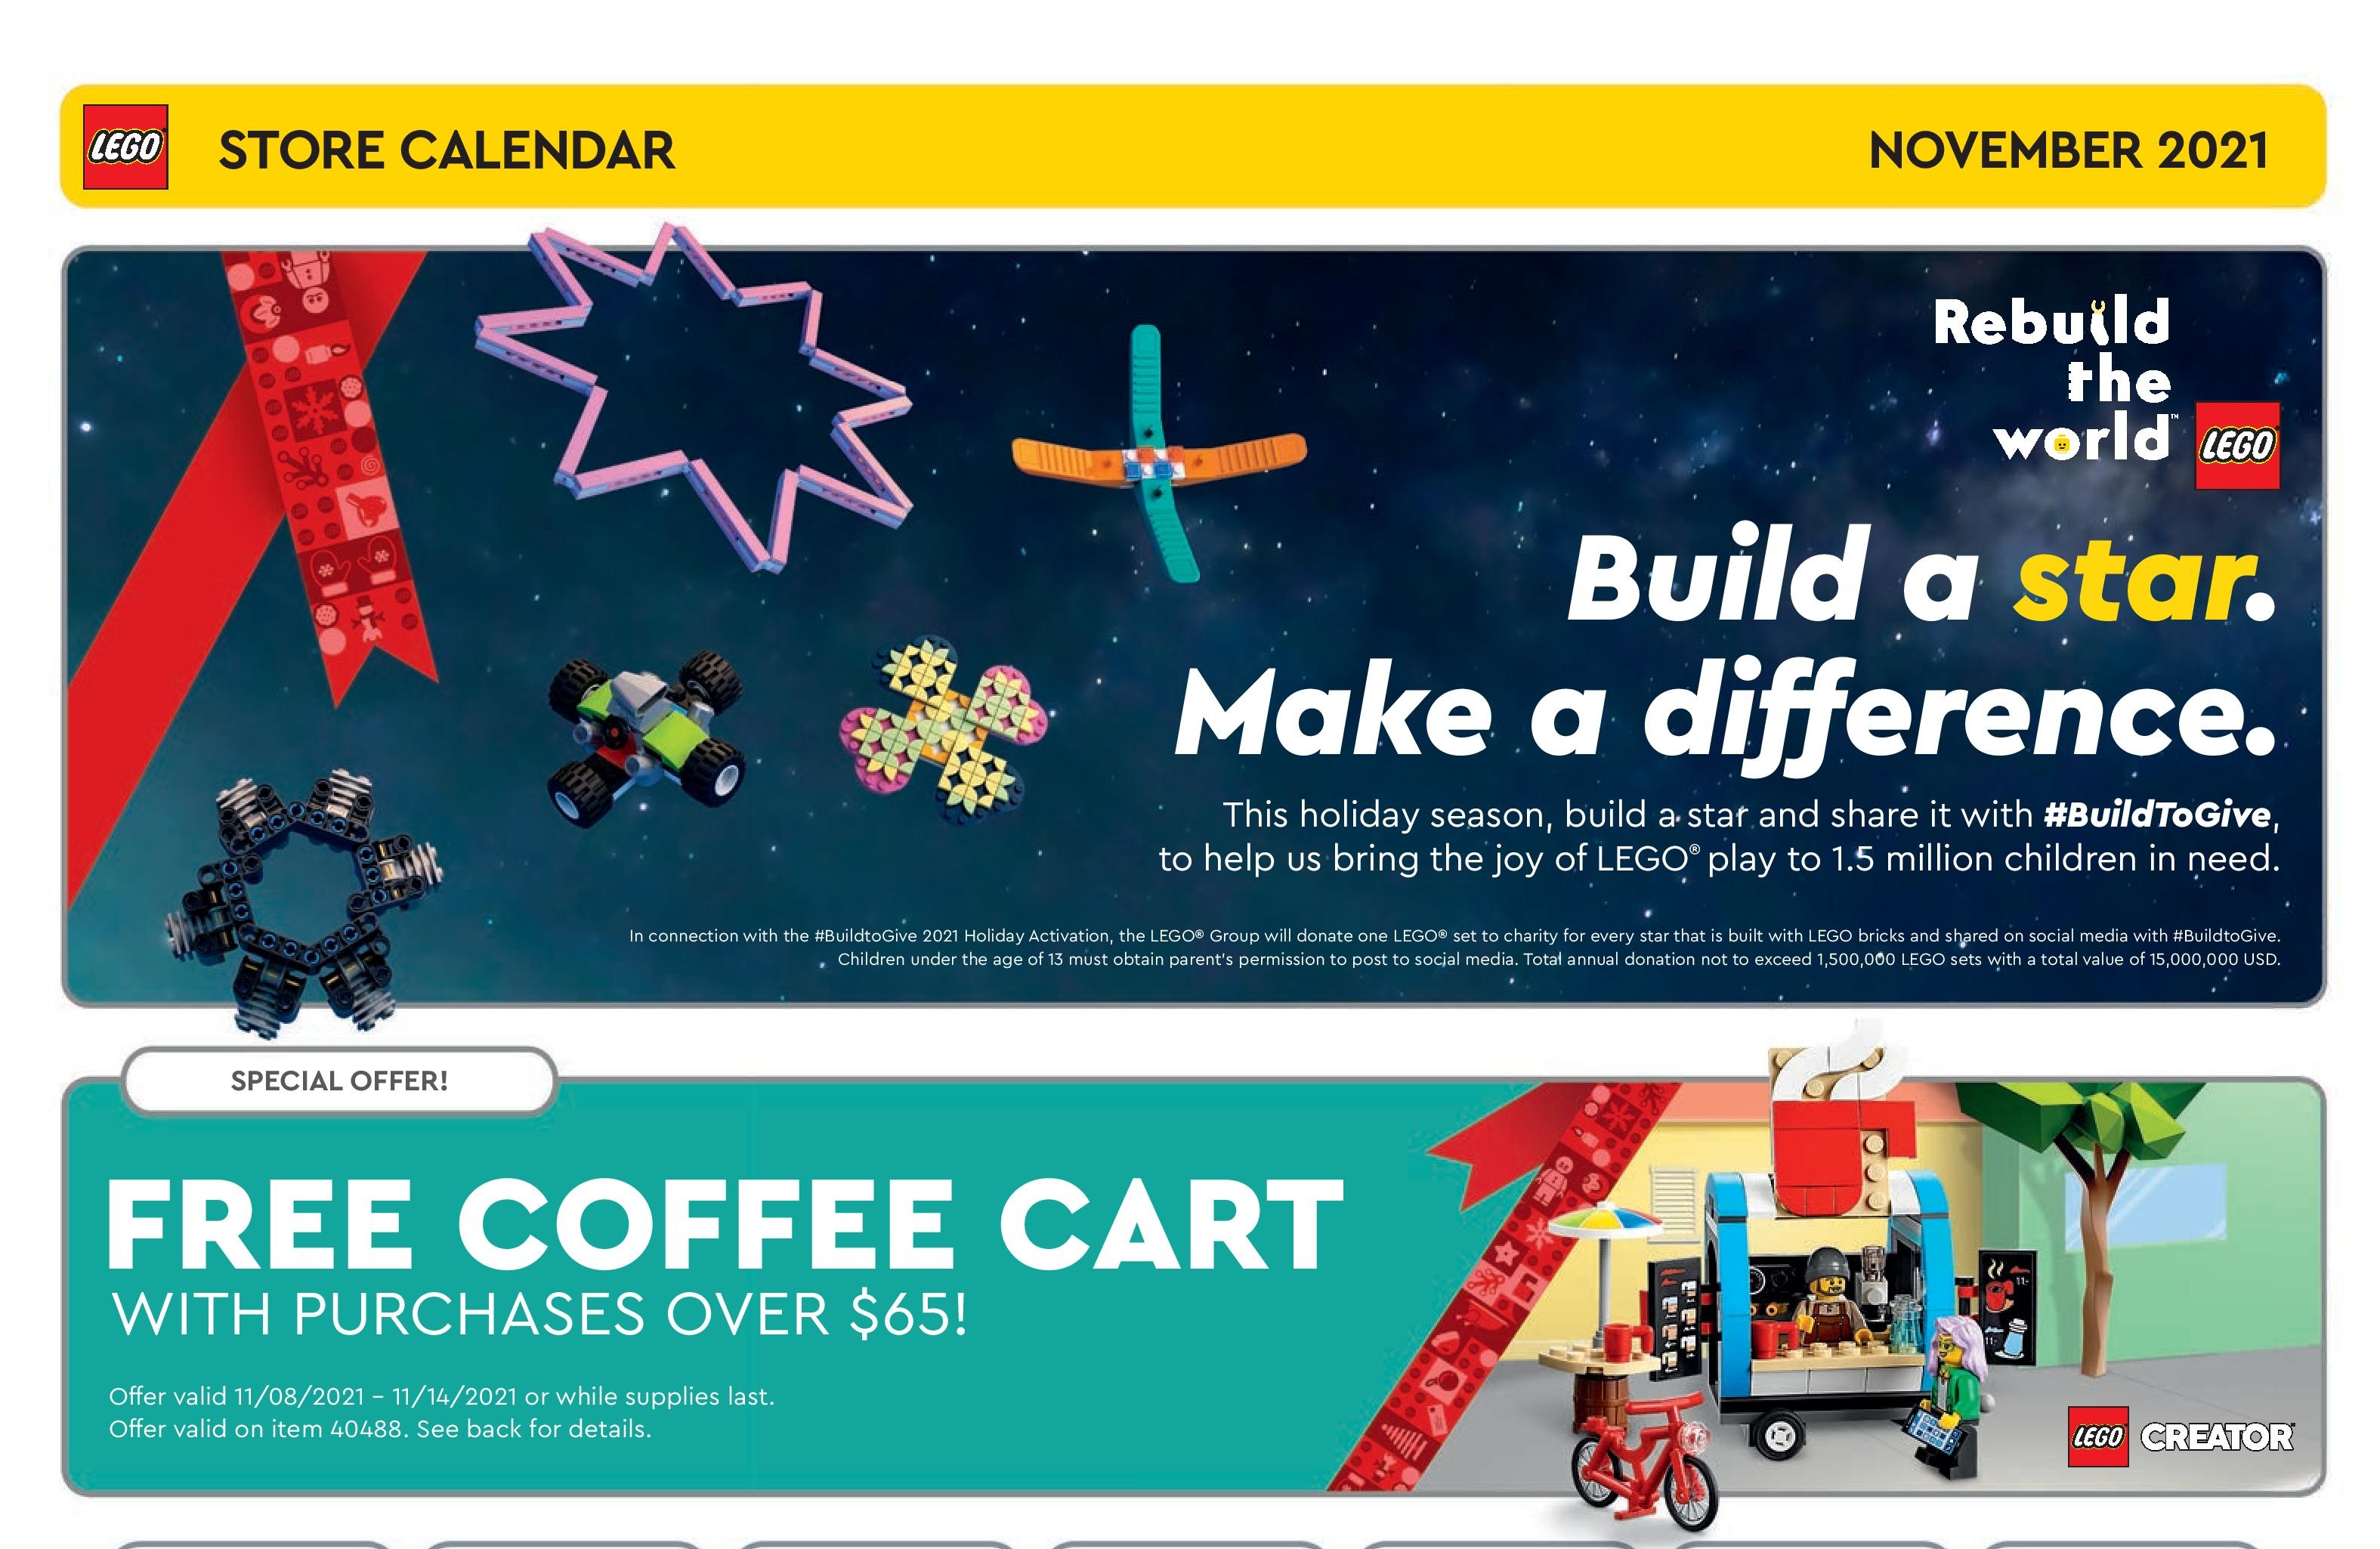 LEGO 2021 Store Calendar Promotions & Events - Brick Fan